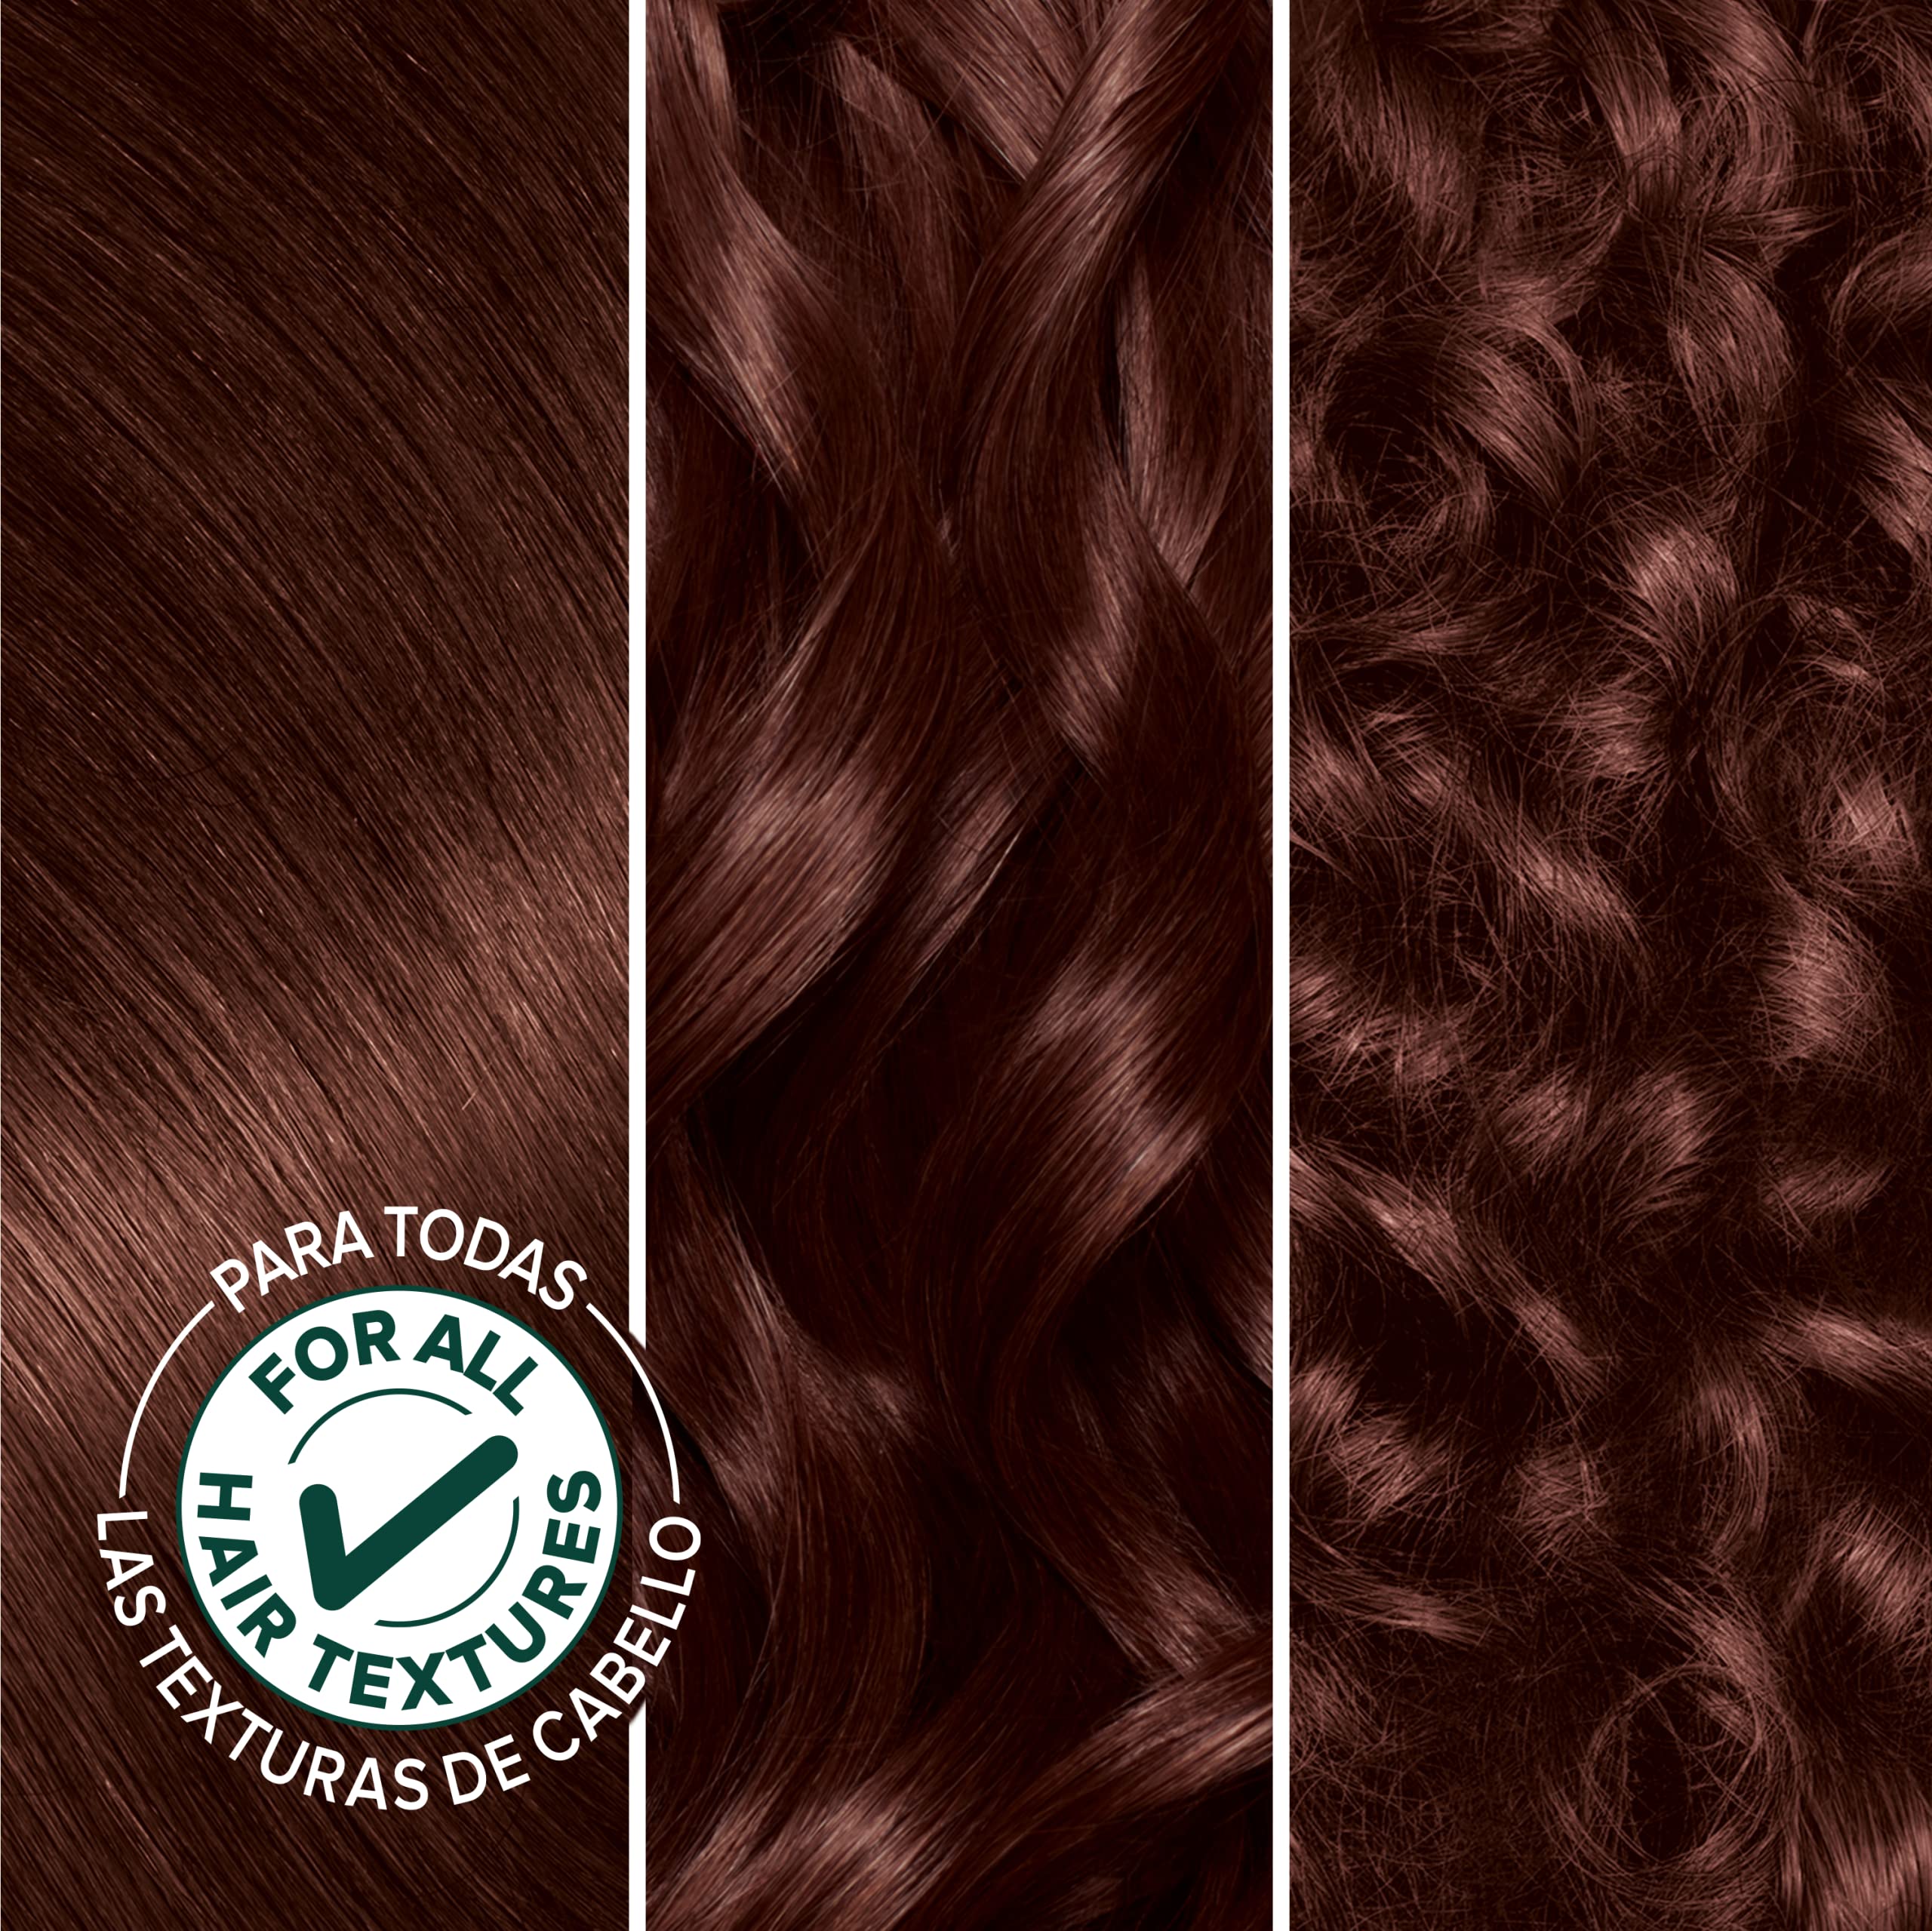 Garnier Hair Color Nutrisse Nourishing Creme, 415 Soft Mahogany Brown (Raspberry Truffle) Permanent Hair Dye, 1 Count (Packaging May Vary)